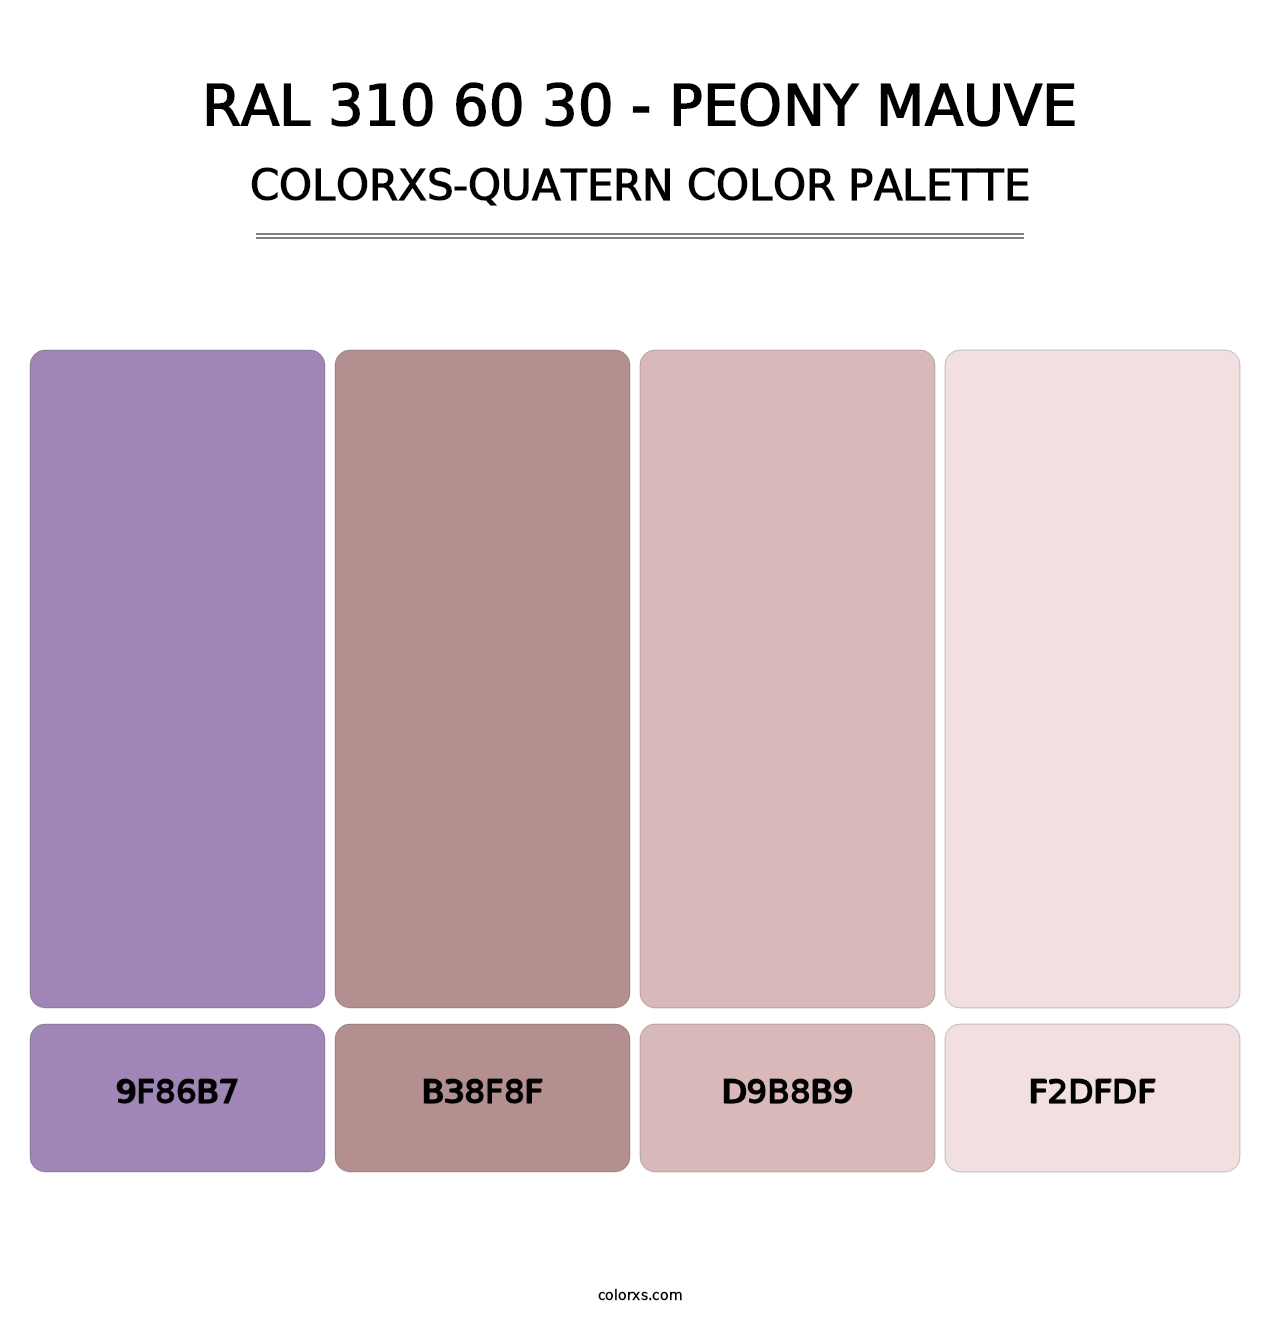 RAL 310 60 30 - Peony Mauve - Colorxs Quatern Palette